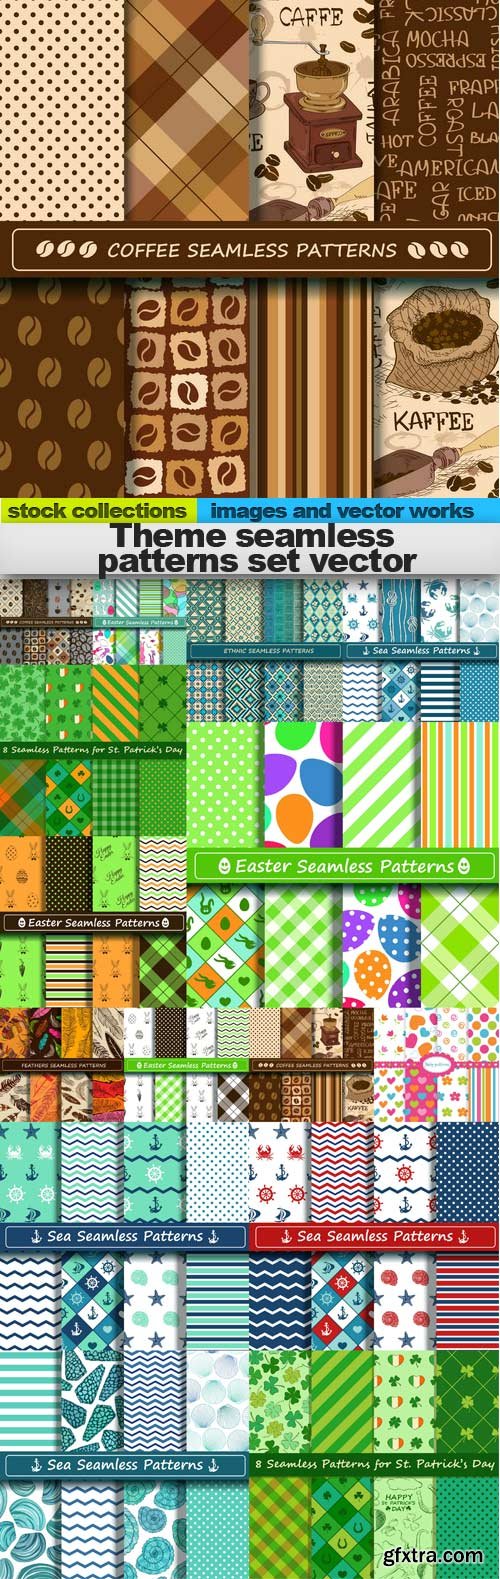 Theme seamless patterns set vector, 15 x EPS